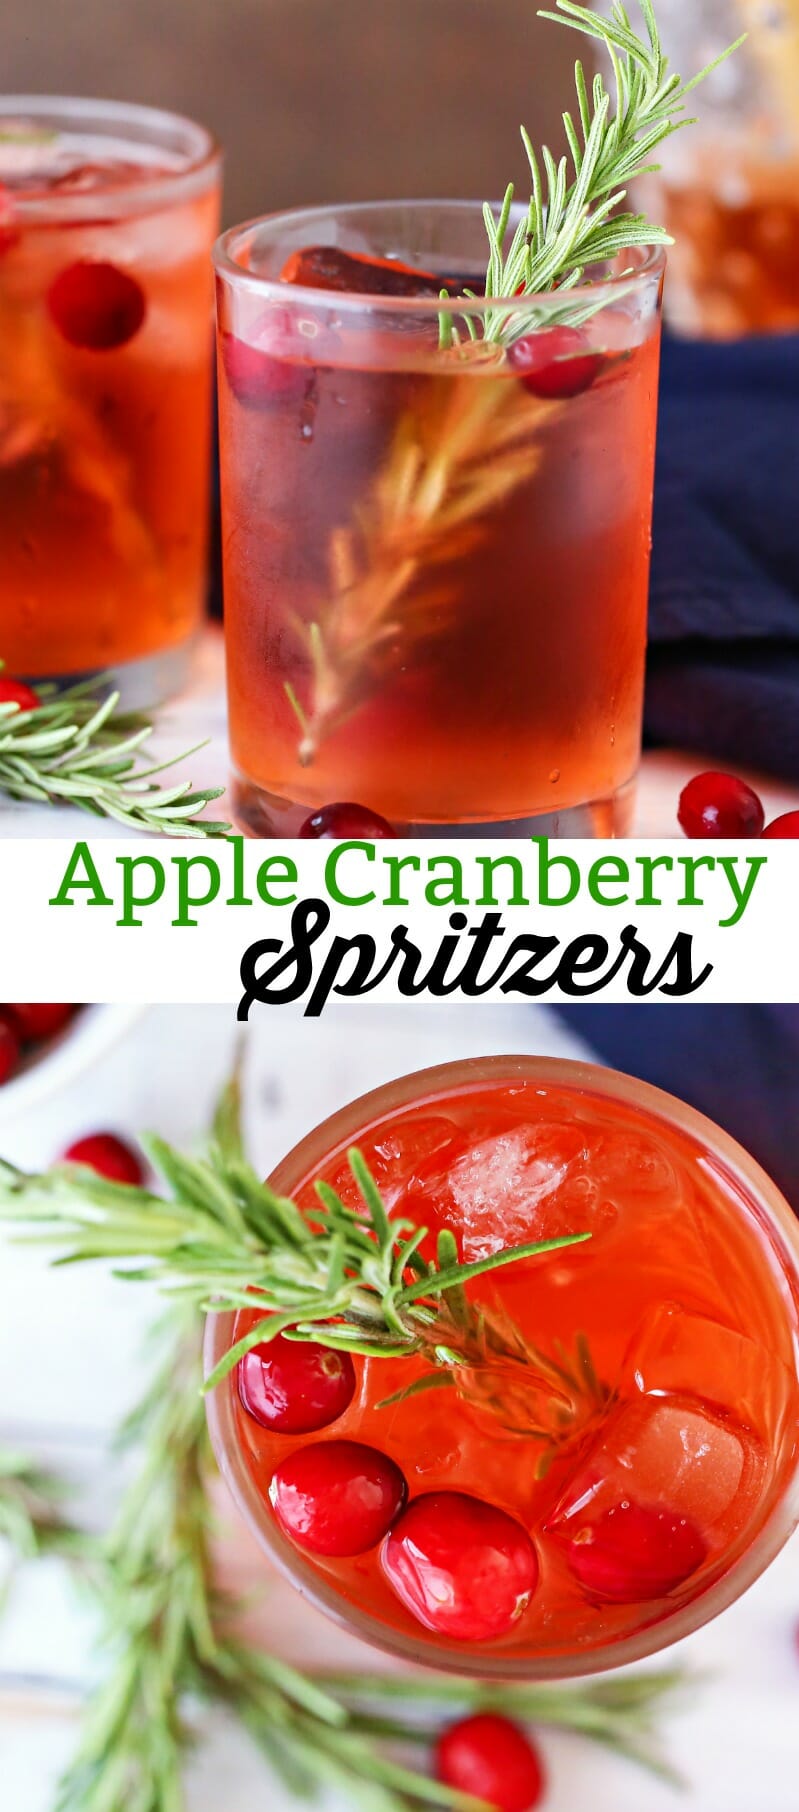 Apple Cranberry Spritzers